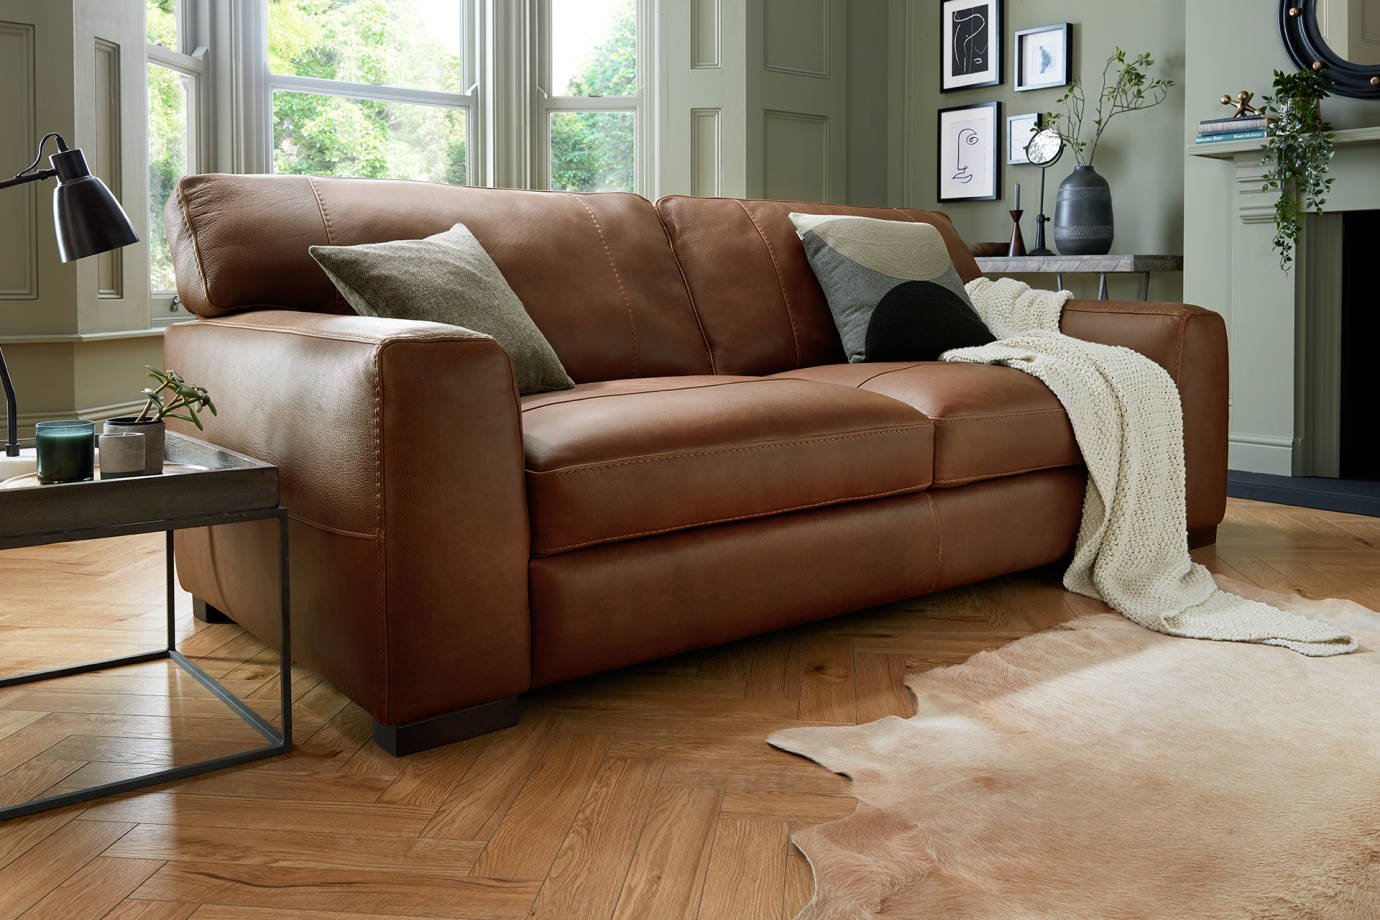 buy brown leather sofa uk